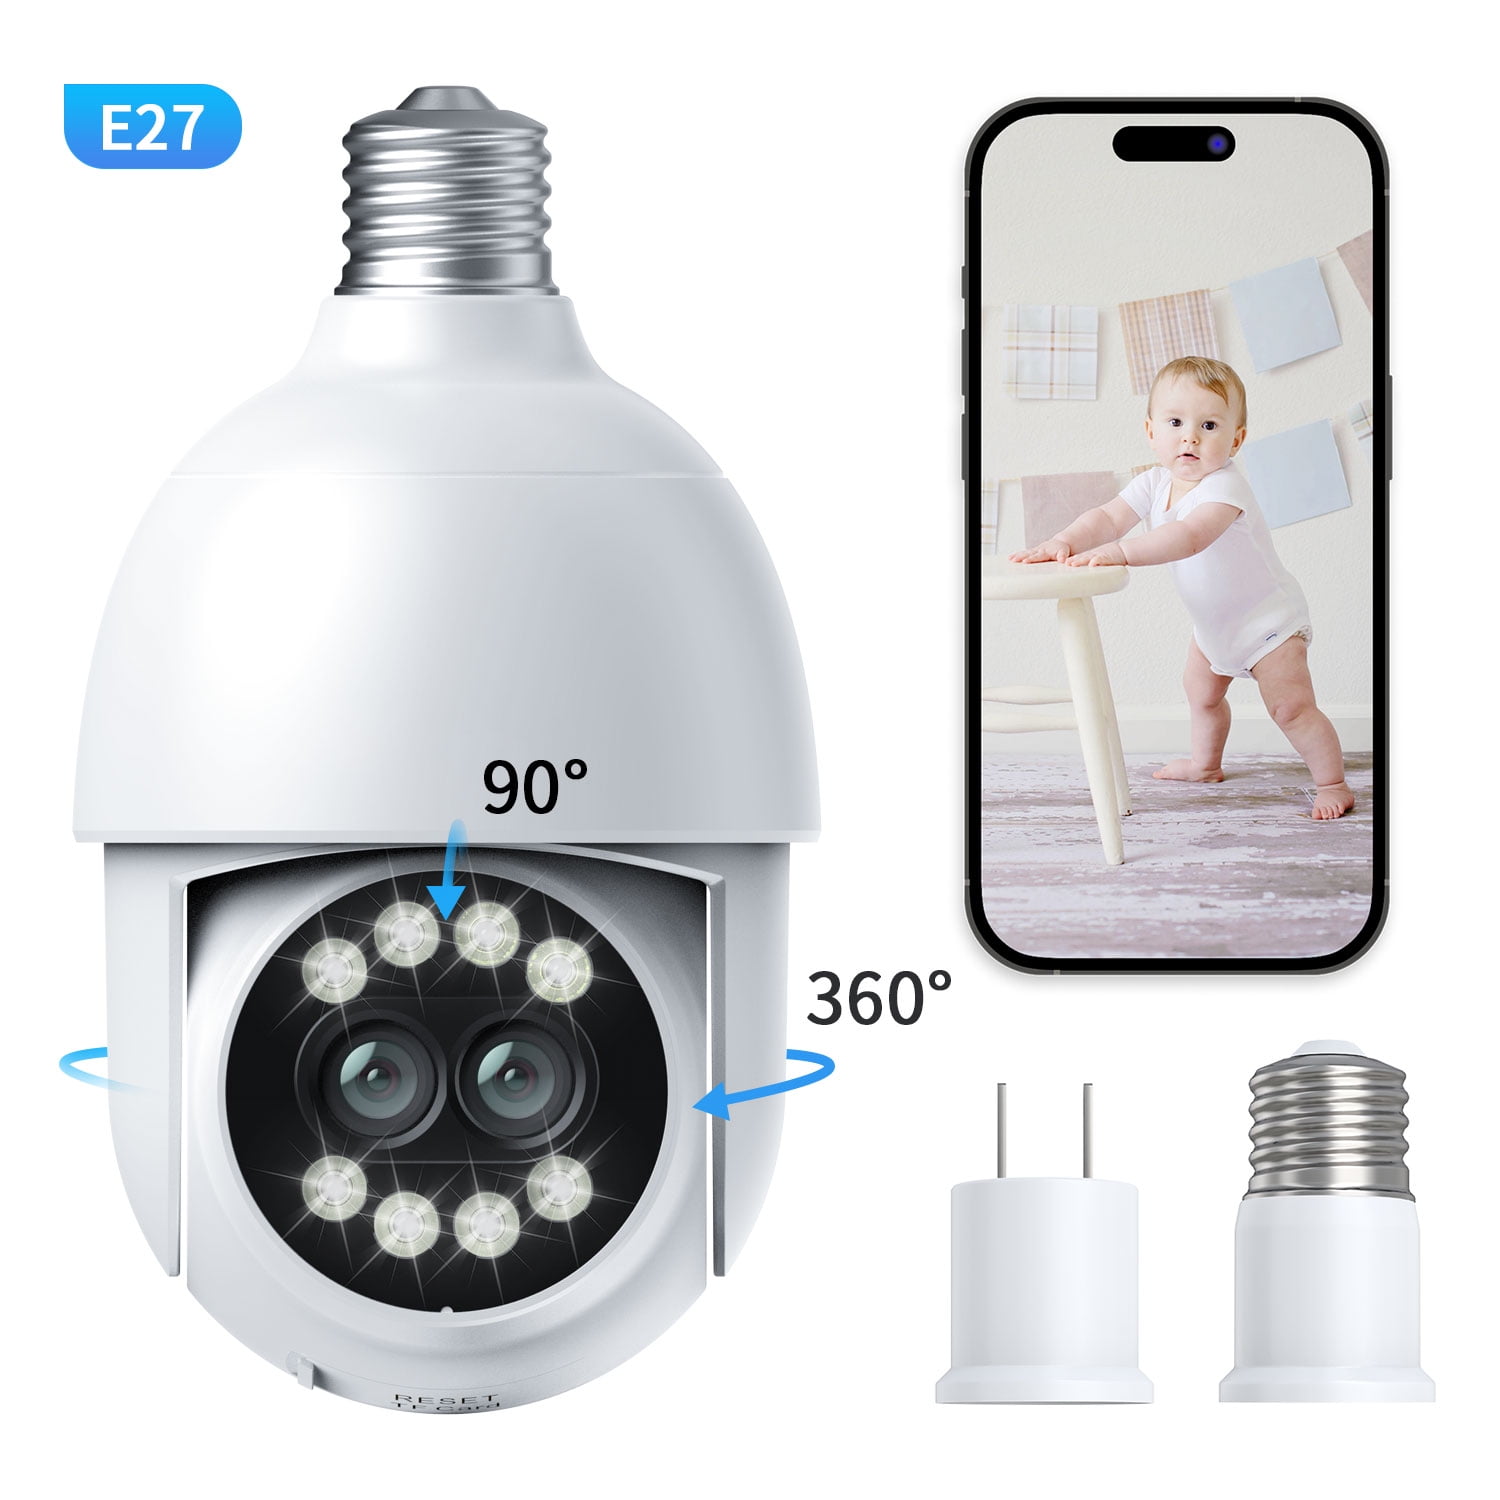 Dual Lens Security Camera,10X Zoom Light Bulb Camera, 2.4Ghz Pan